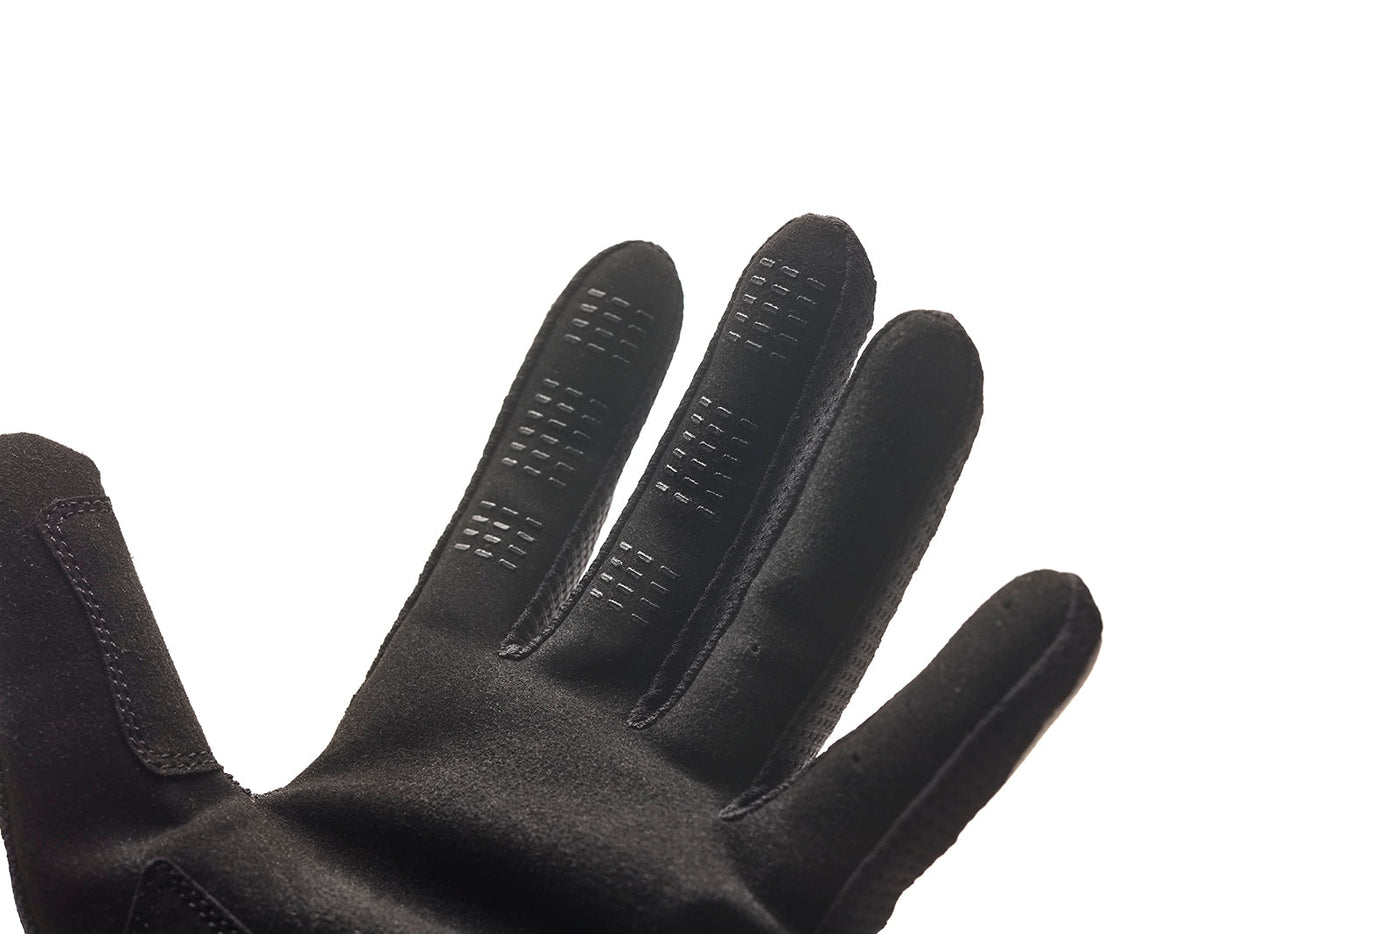 Fuel Bundle: Racing Division Jersey und Handschuhe